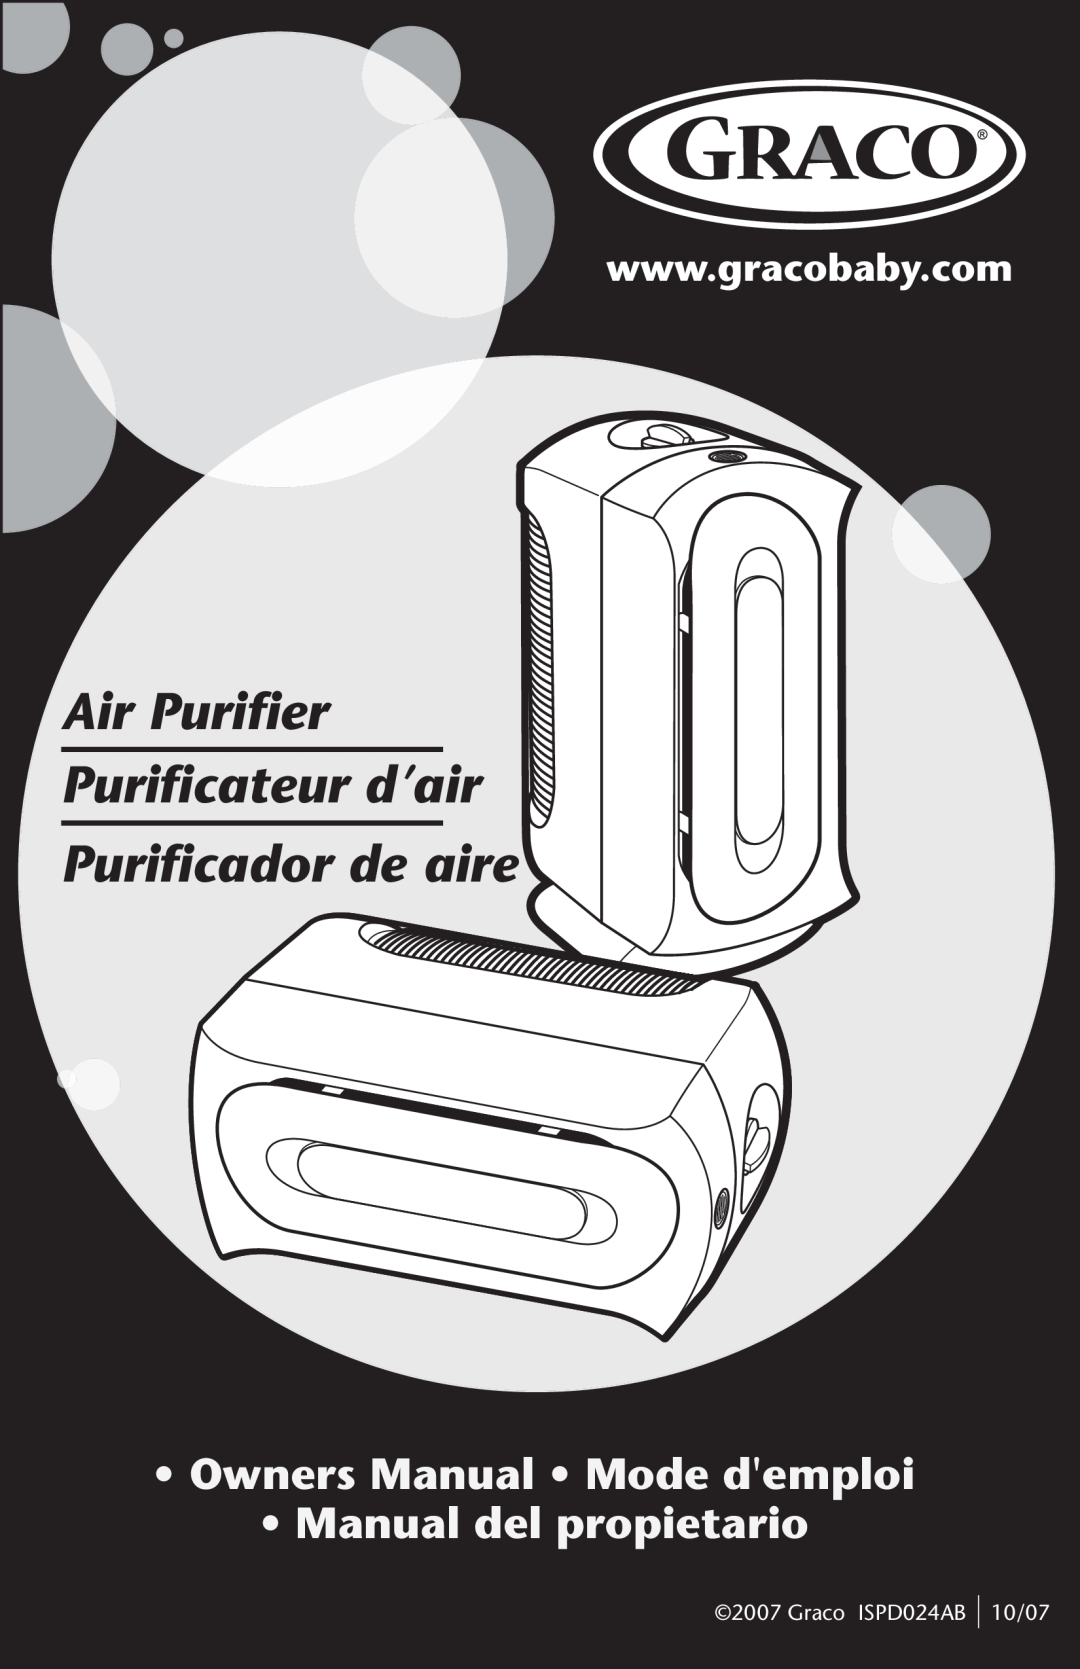 Graco ISPD024AB owner manual Air Purifier, Purificateur d’air, Purificador de aire, Manual del propietario, 10/07 